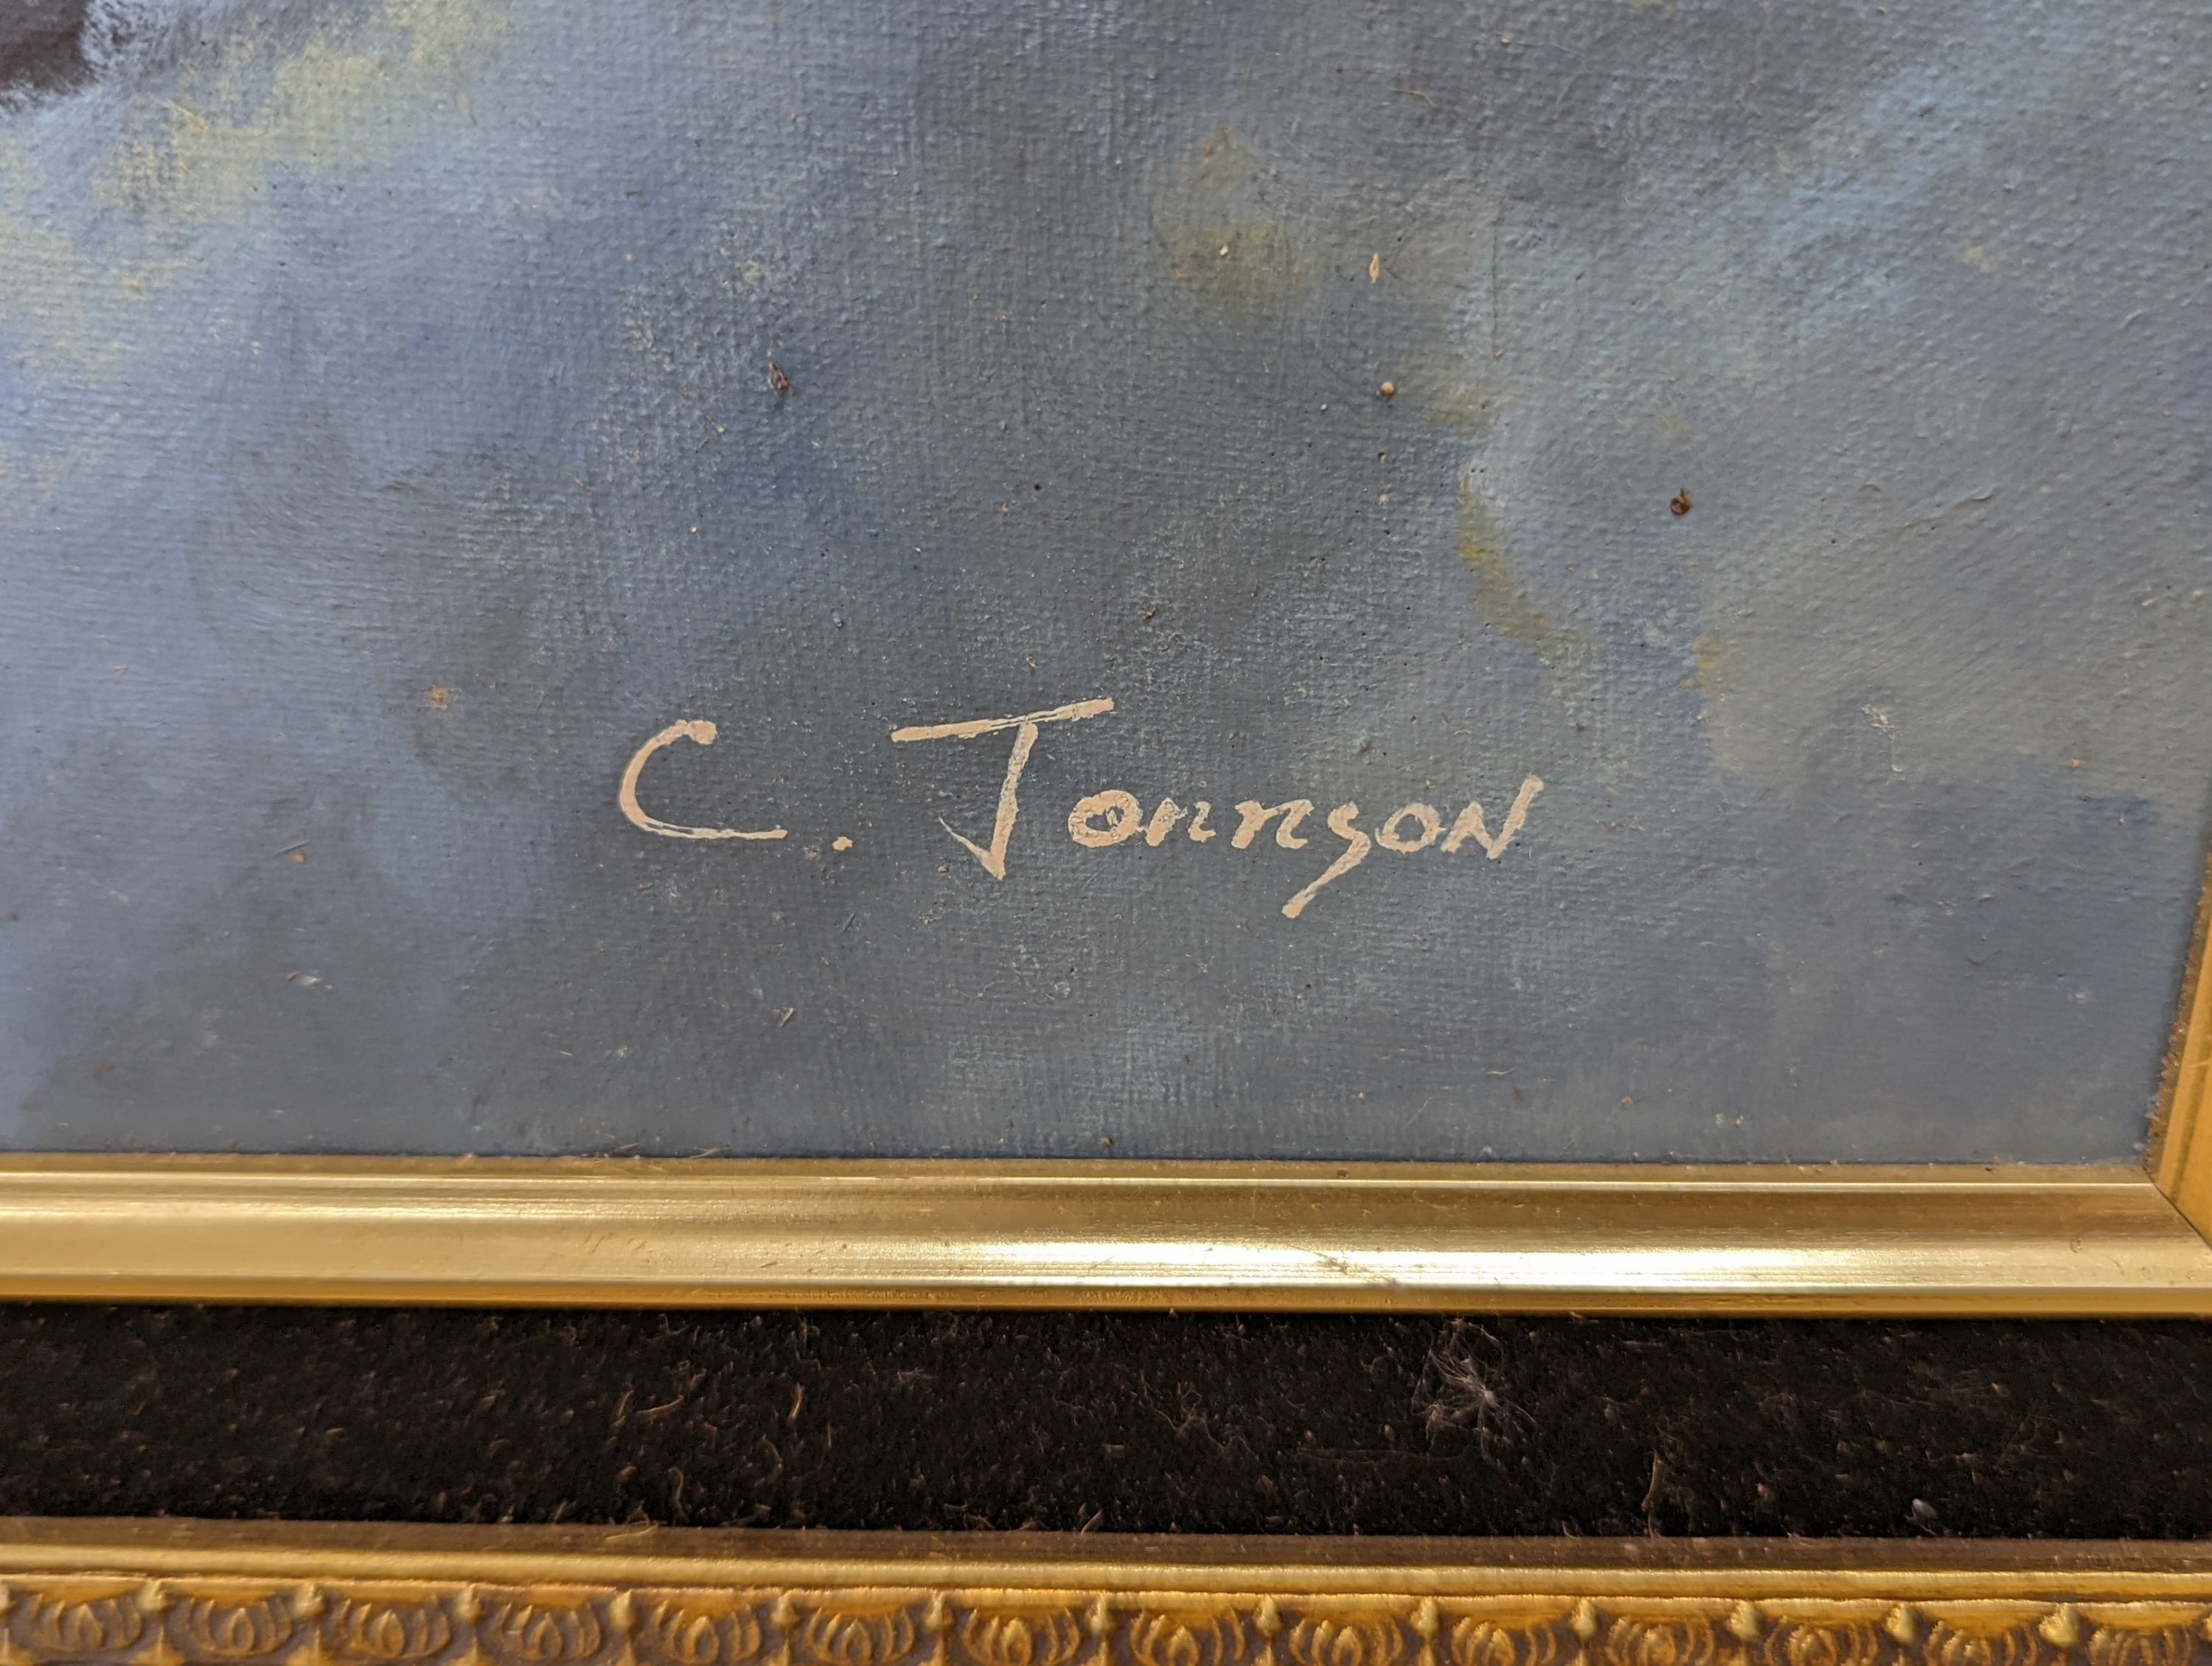 C. Jonnson, oil on canvas, Street market in winter, signed, 50 x 60cm